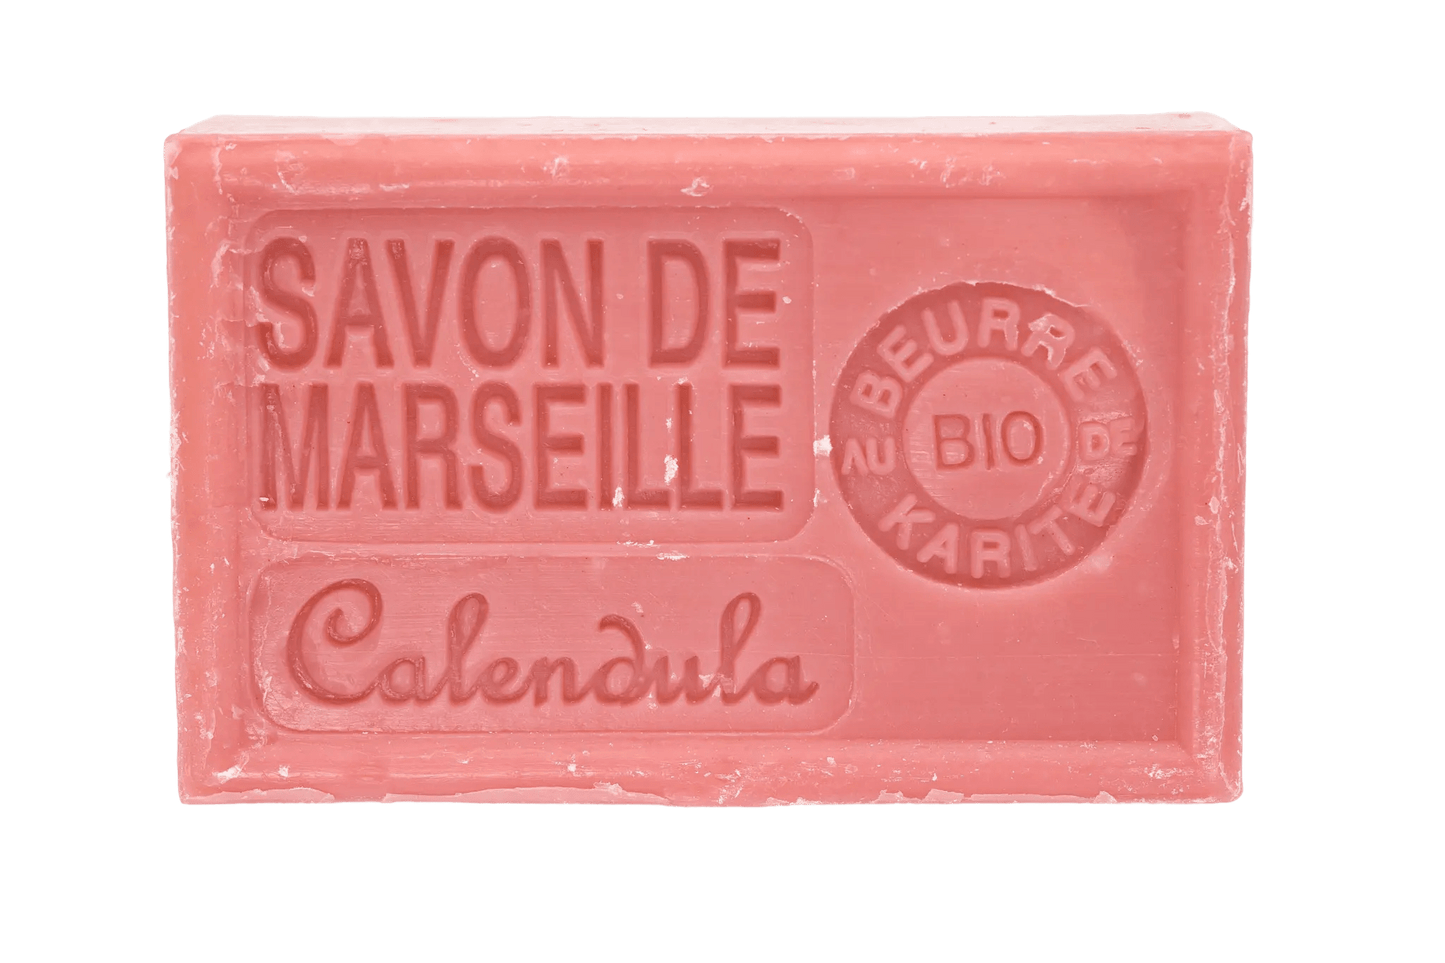 Savon de Marseille parfumé Calendula 125gr